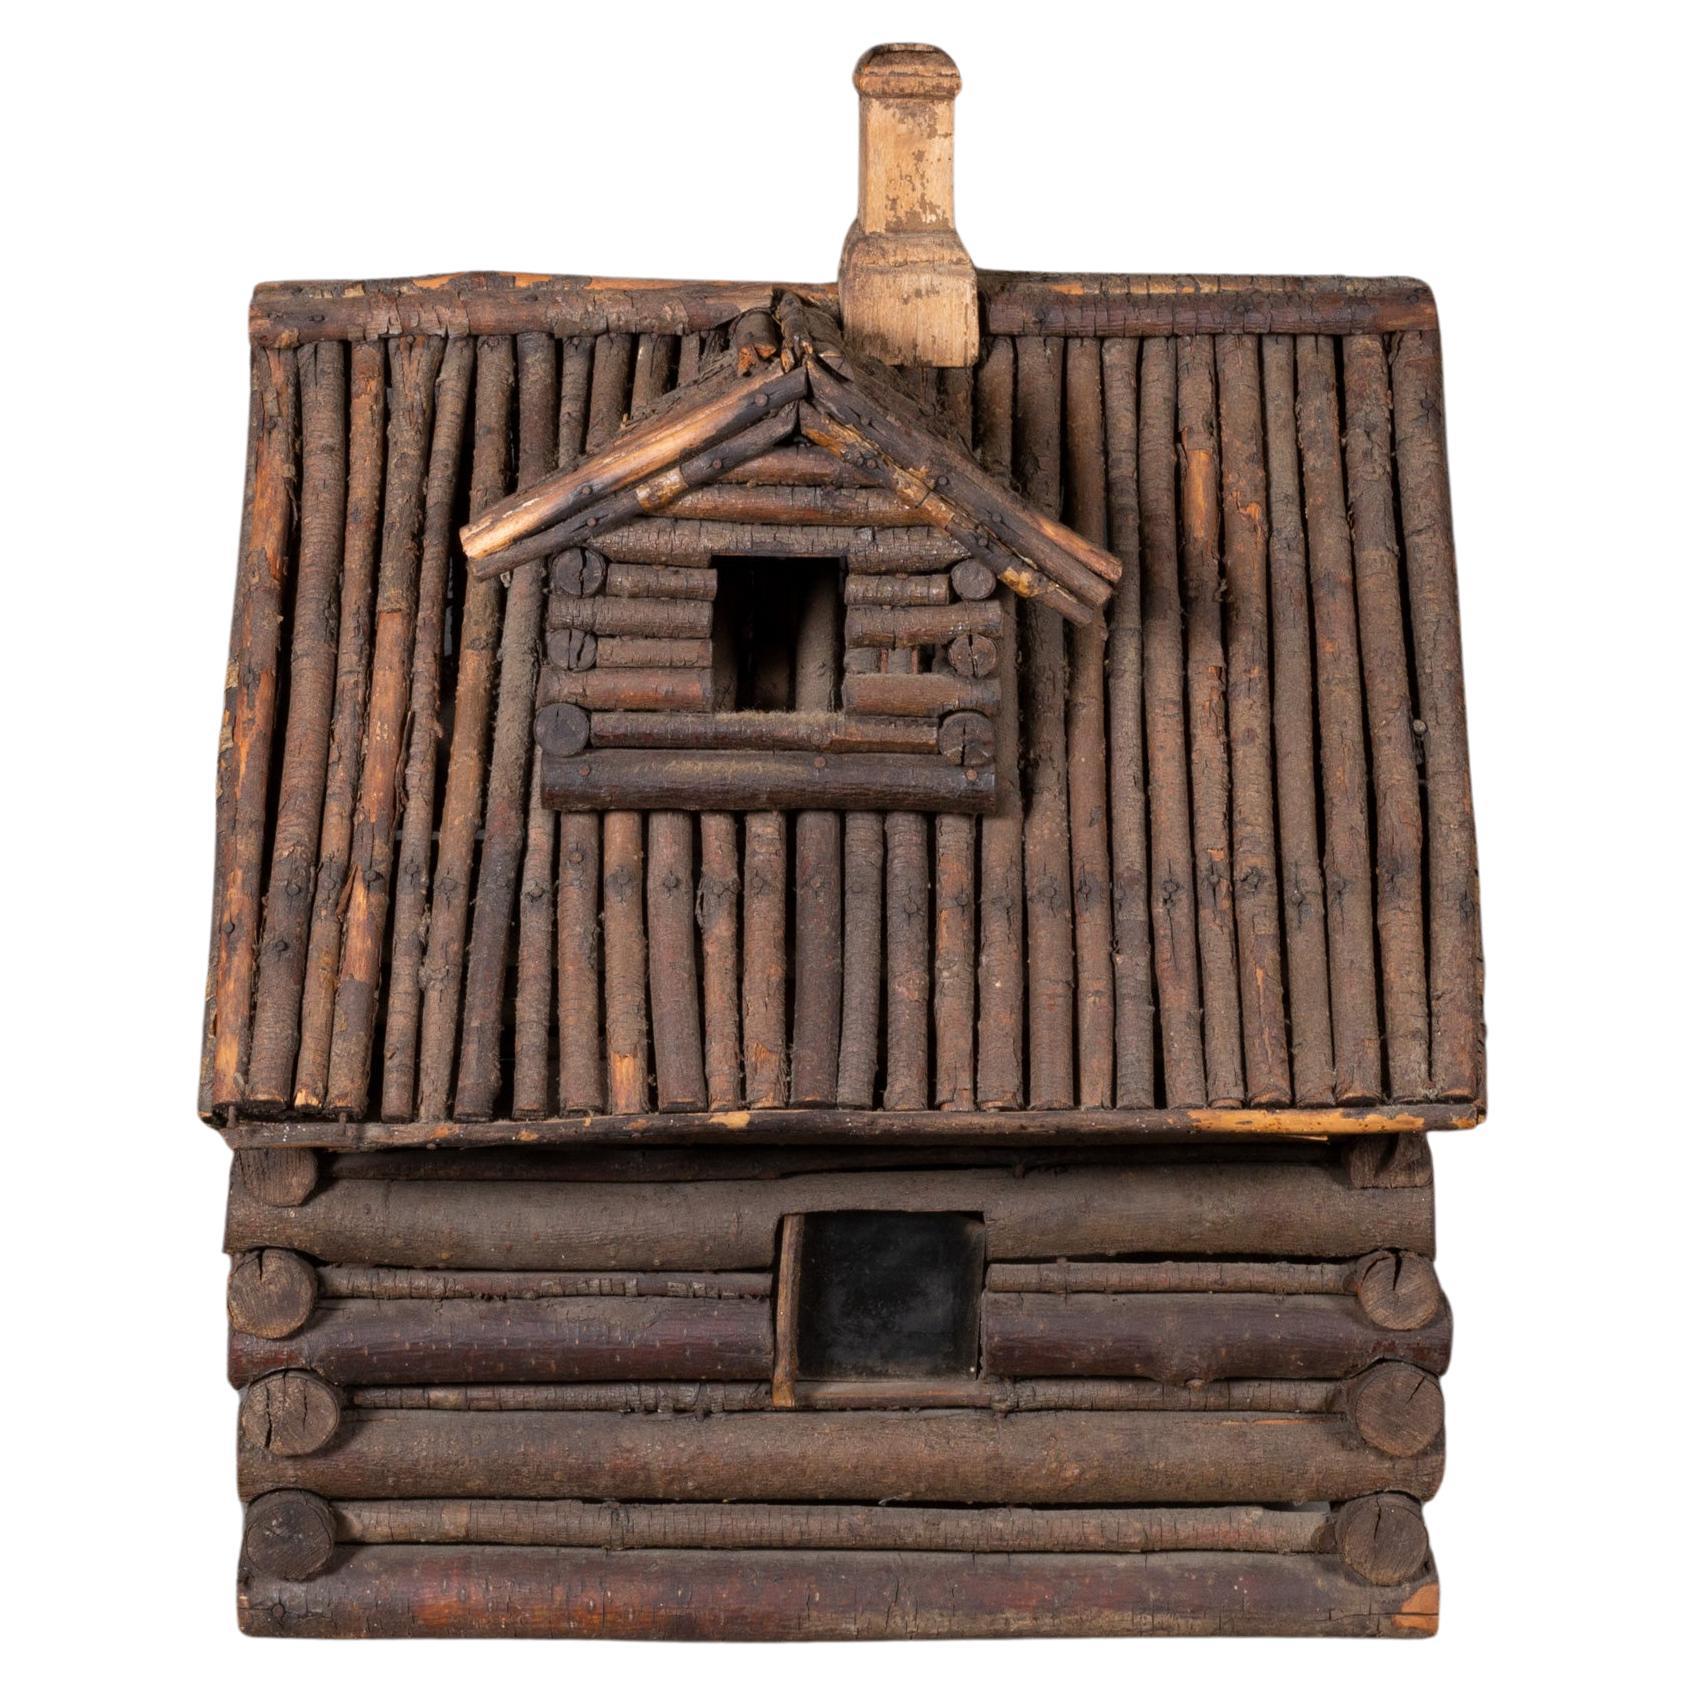 Early 20th c. Folk Art Log Cabin Model c.1900-1940 (FREE SHIPPING)